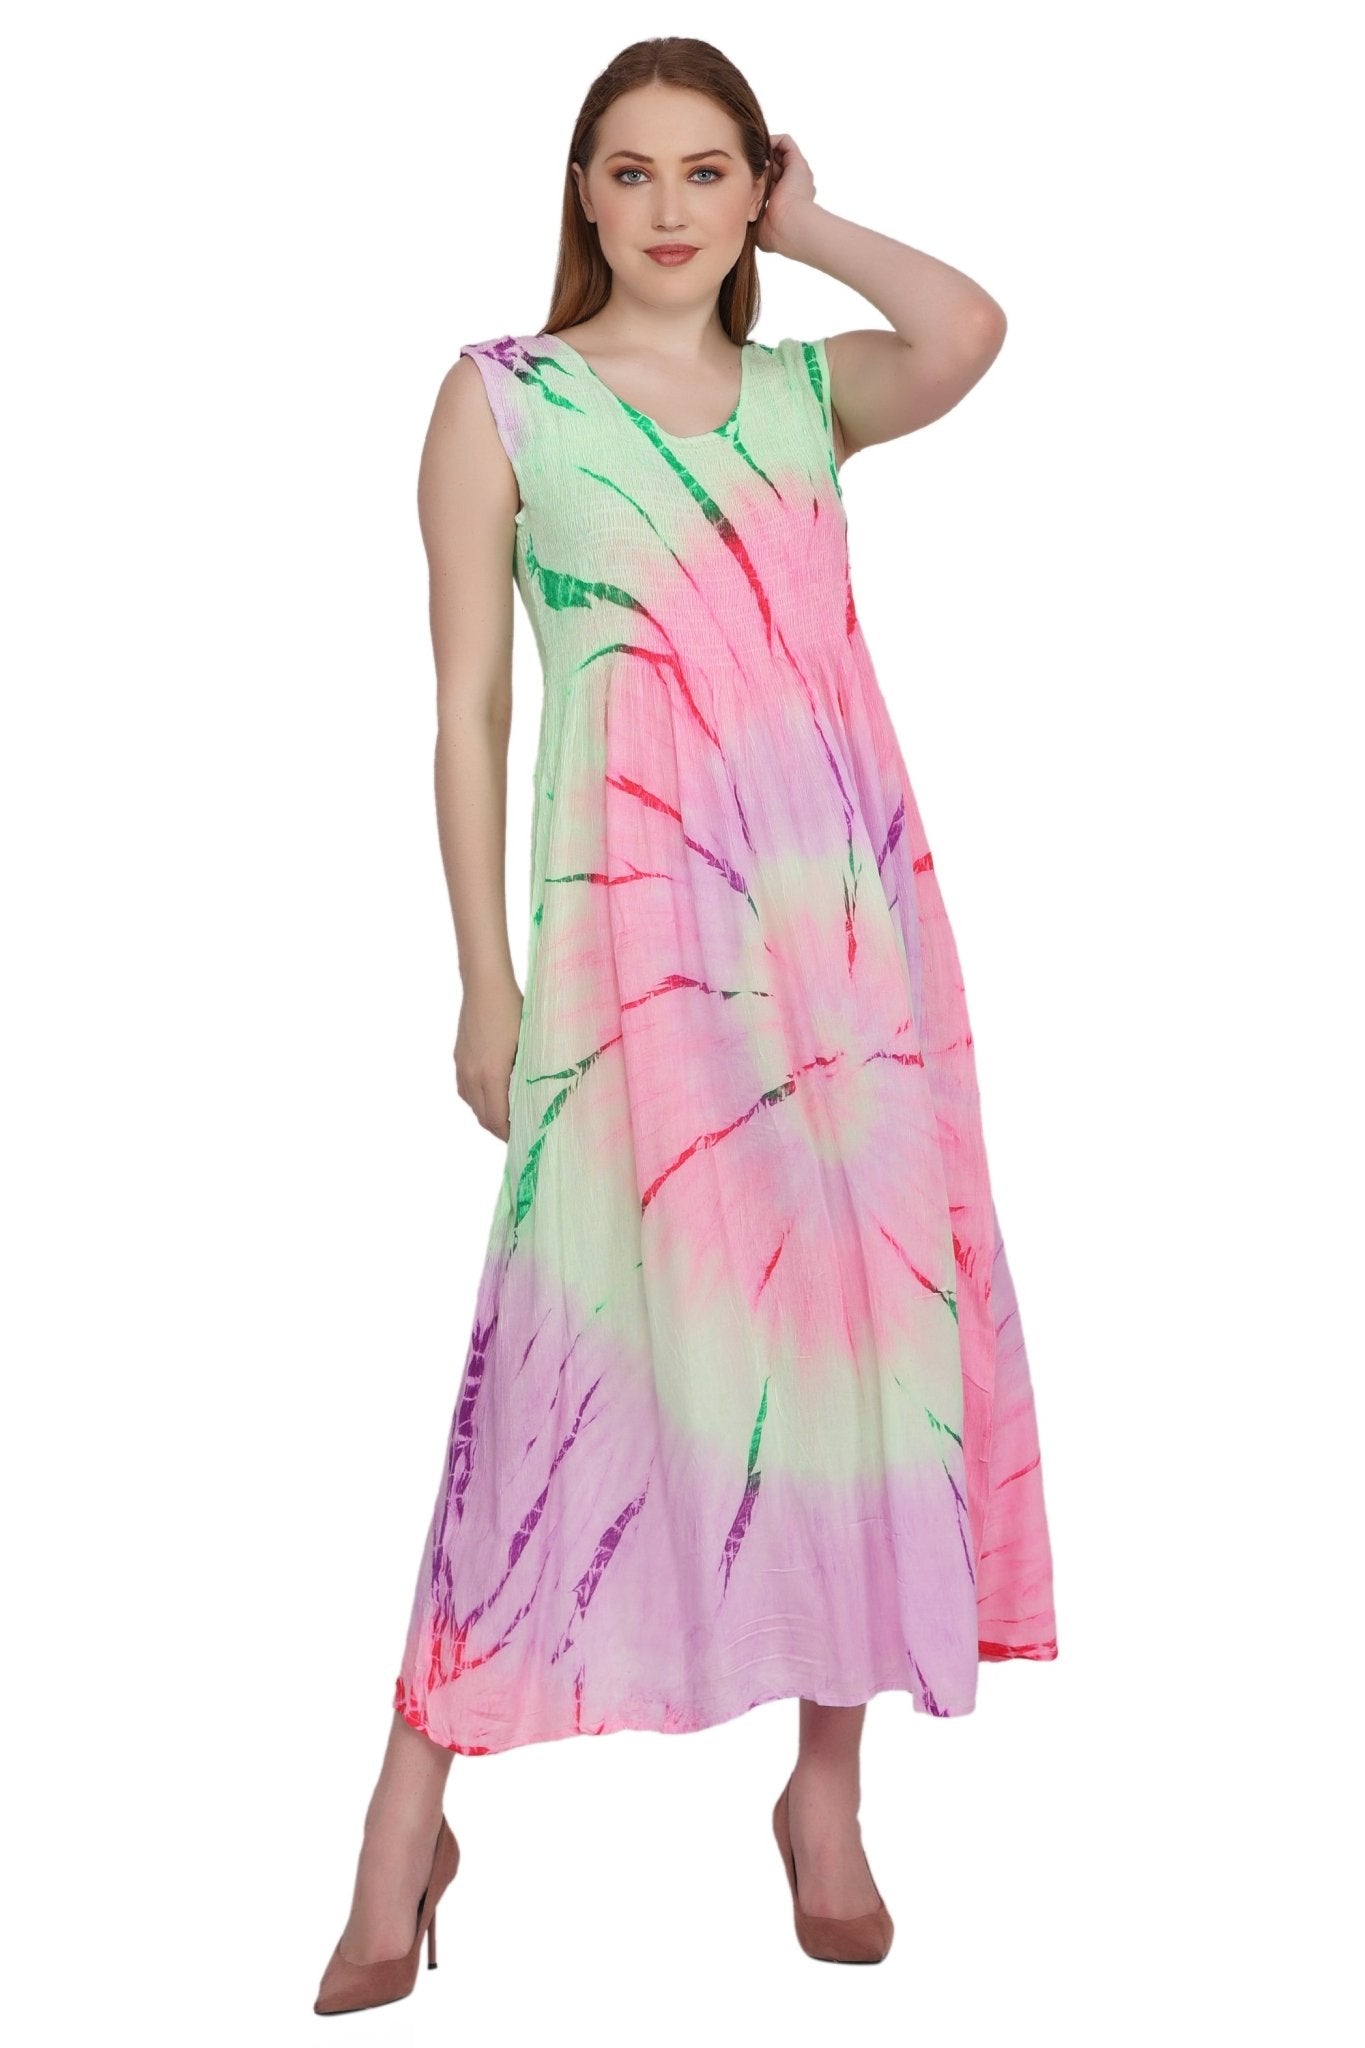 Neon Tie Dye Sleeveless Dress 522138 - Advance Apparels Inc